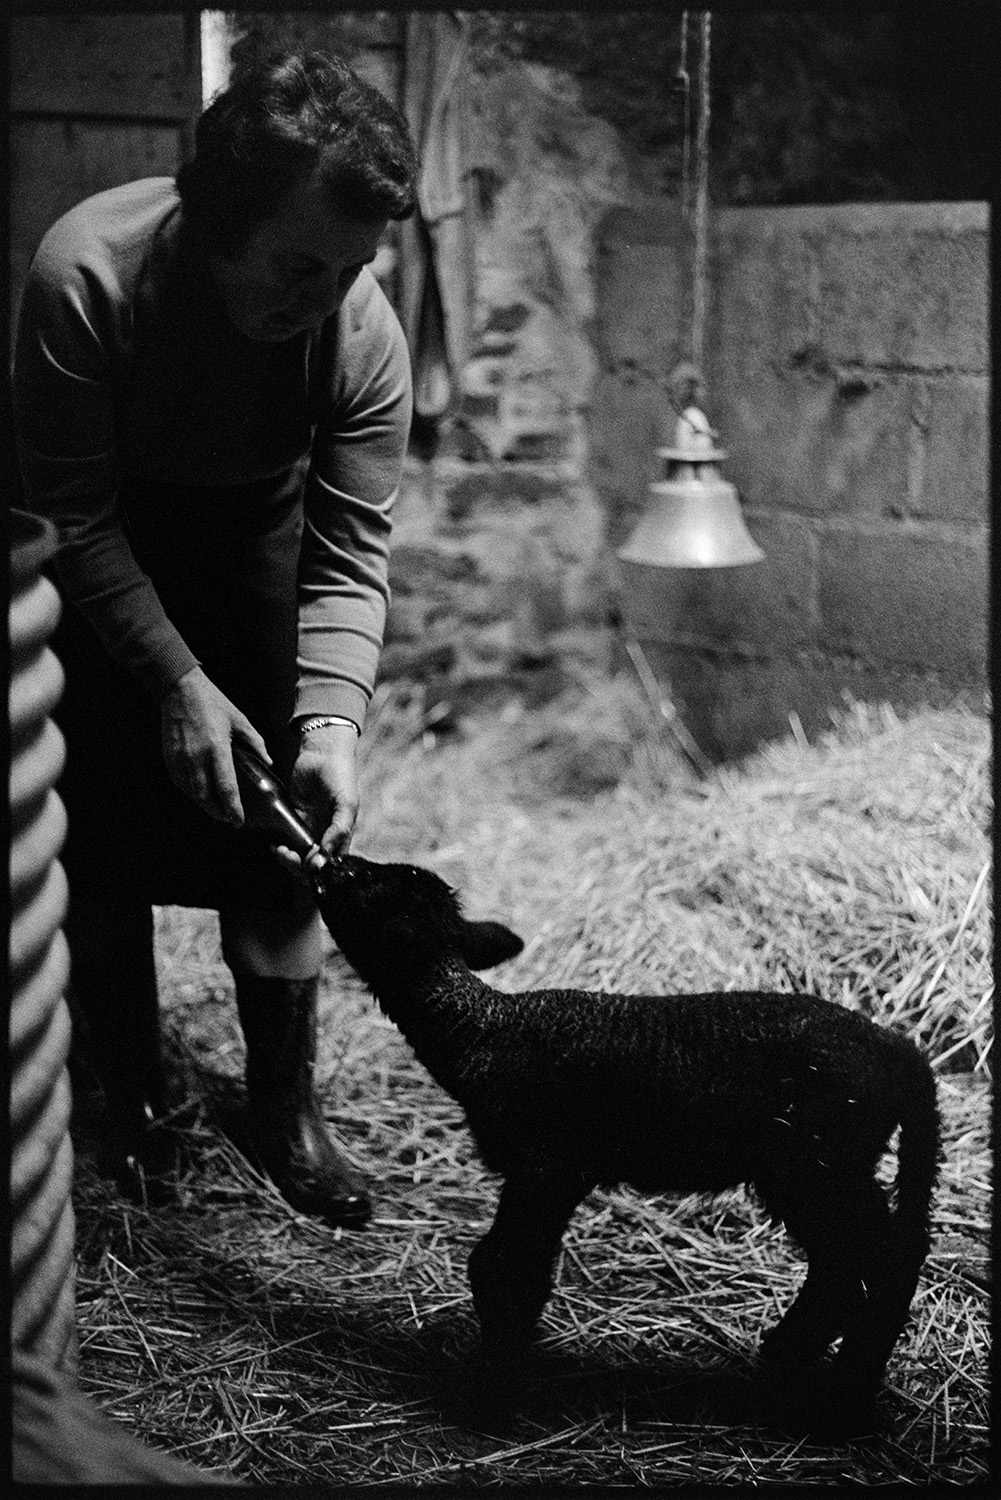 Woman hand feeding lamb with bottle. 
[Hettie Ward bottle feeding a lamb in a barn at Parsonage, Iddesleigh.]